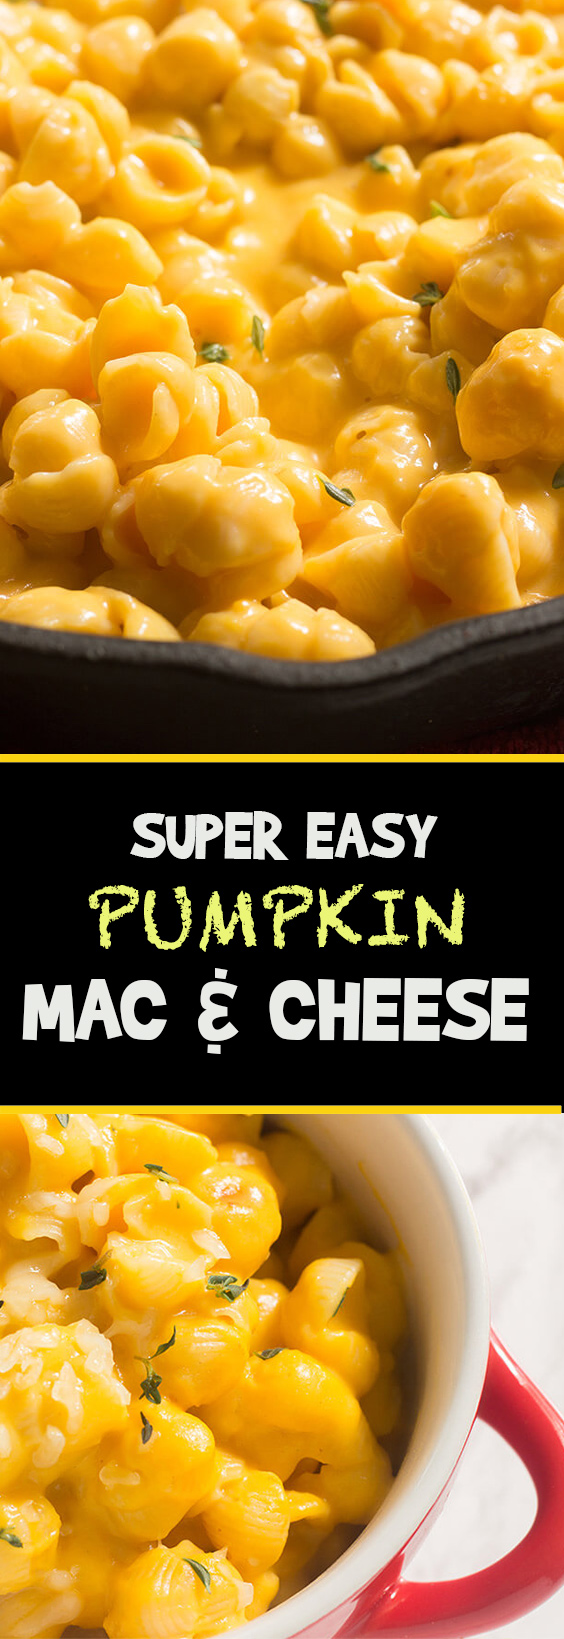 Super-easy-Pumpkin-Mac-and-cheese_long-pin